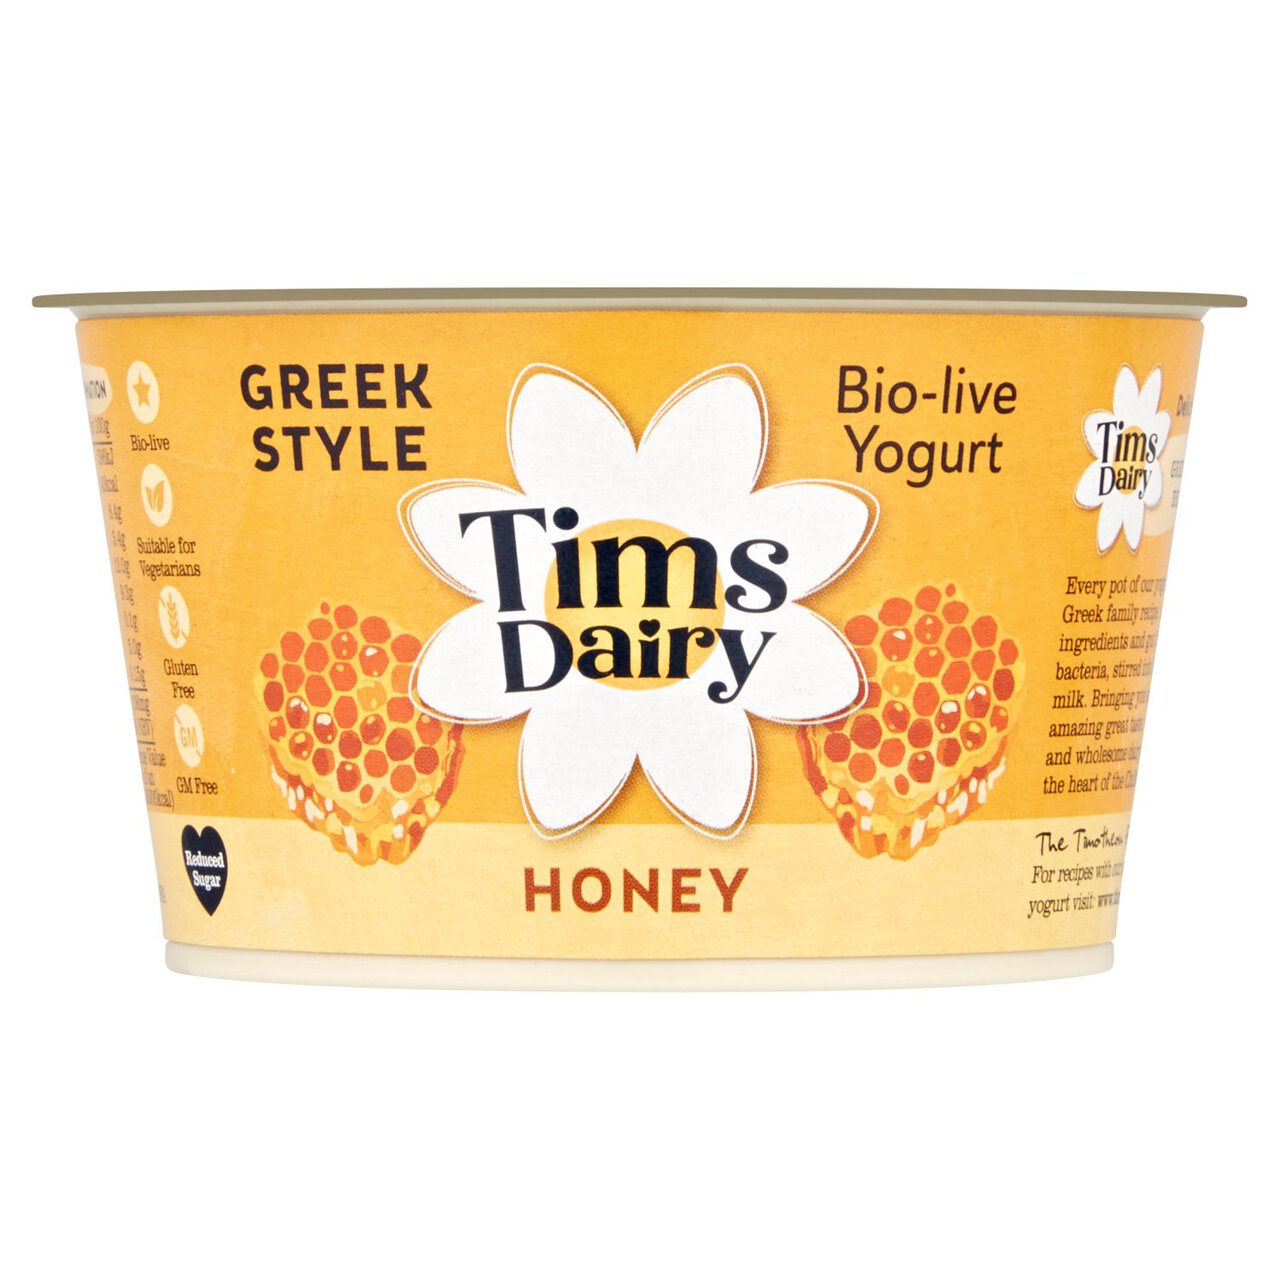 Tims Dairy Greek Style Yoghurt with Honey 175g